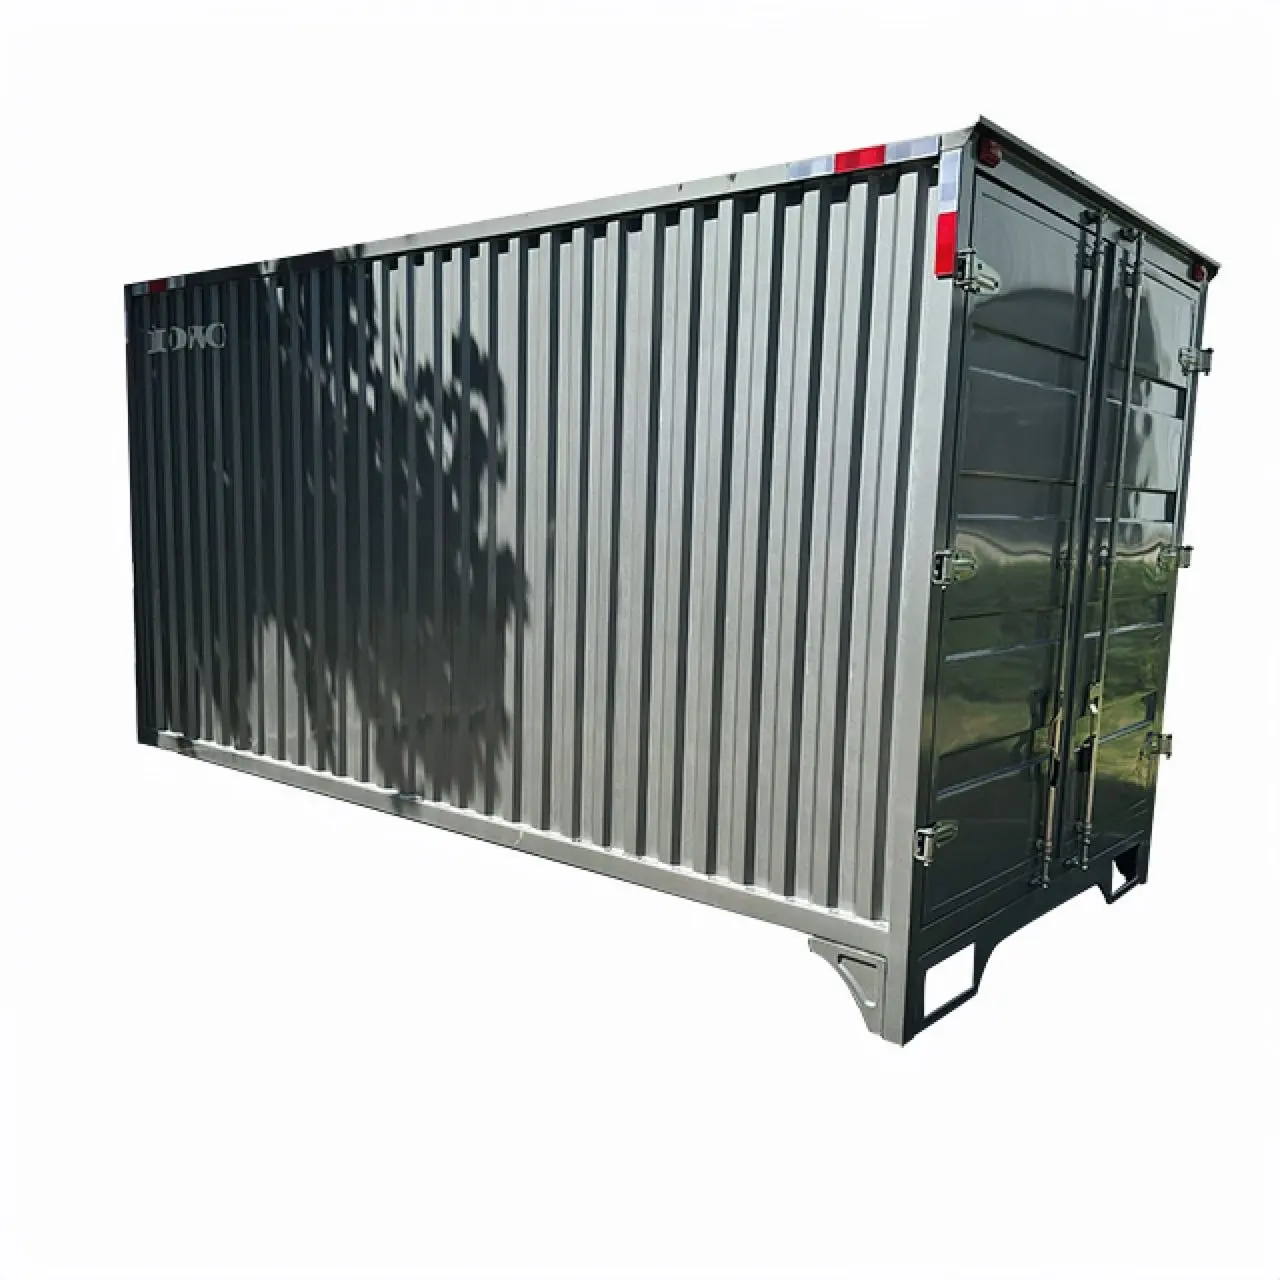 AUMARK Corrugated Freight Car Truck Body for Durable Transportation cargo box truck body